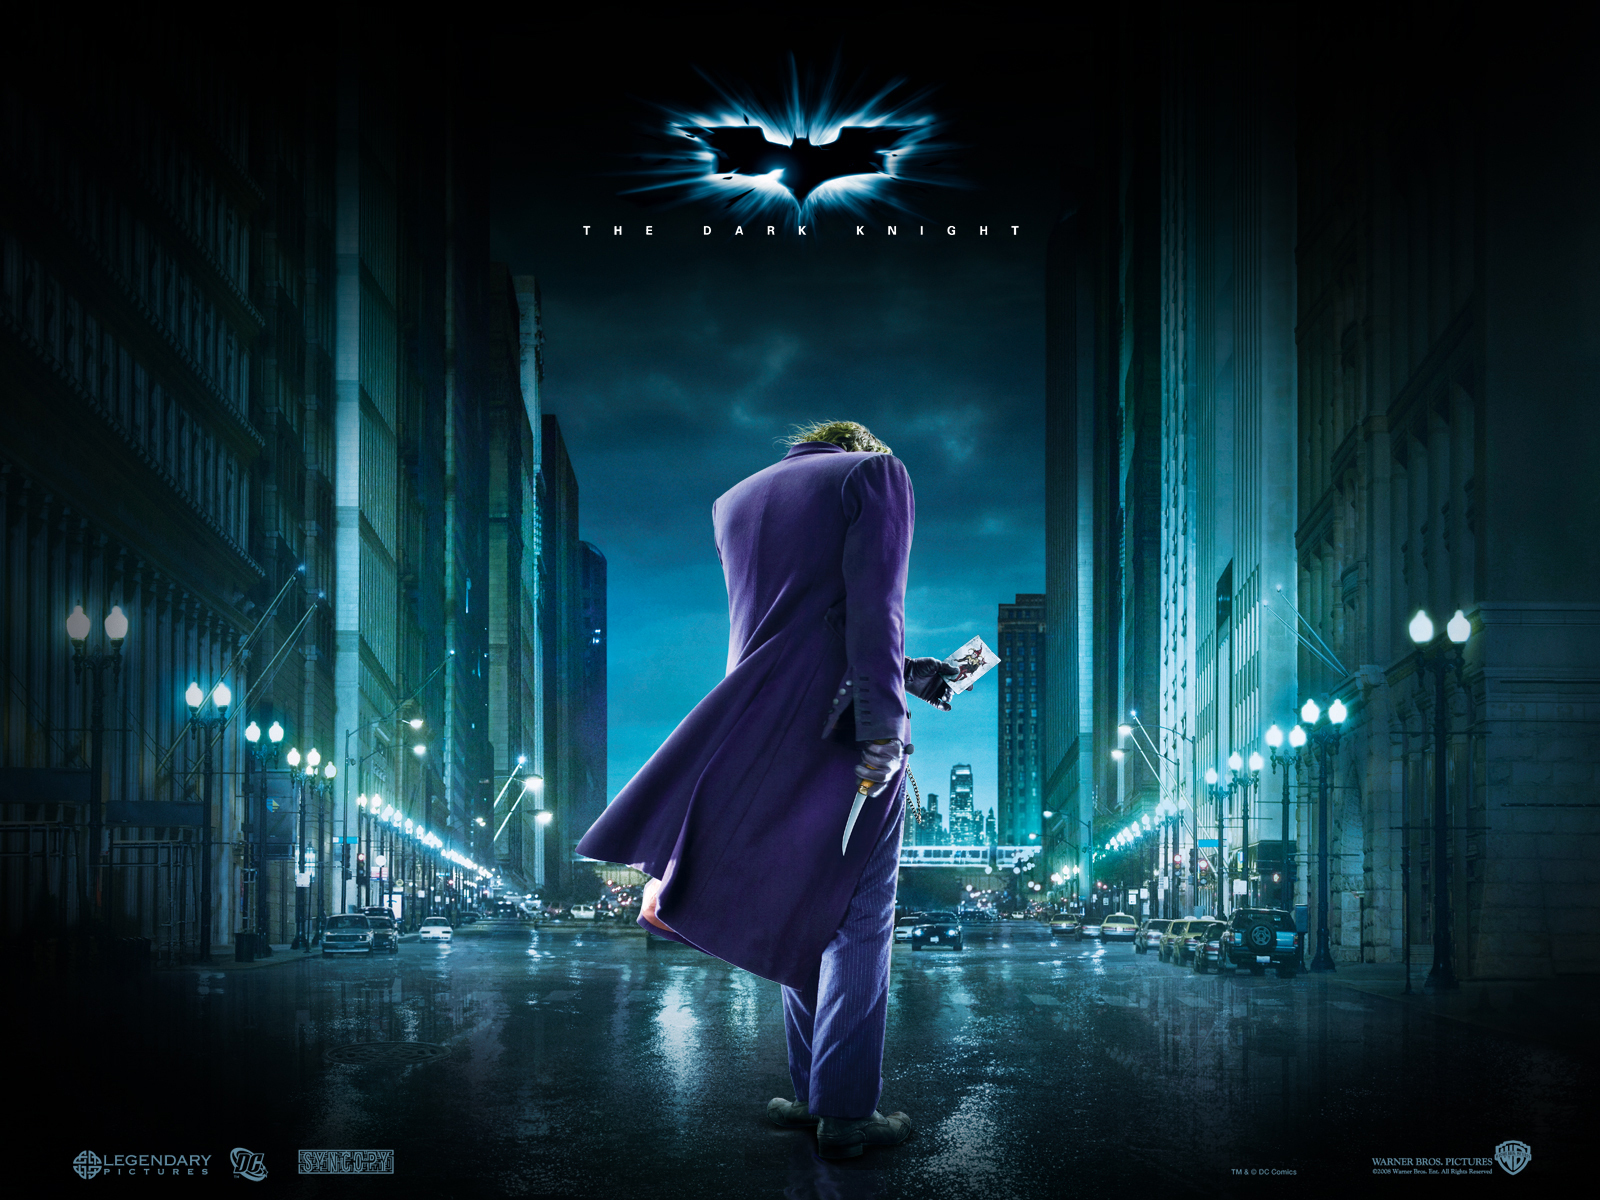 Batman - The Dark Knight Wallpaper (7358620) - Fanpop